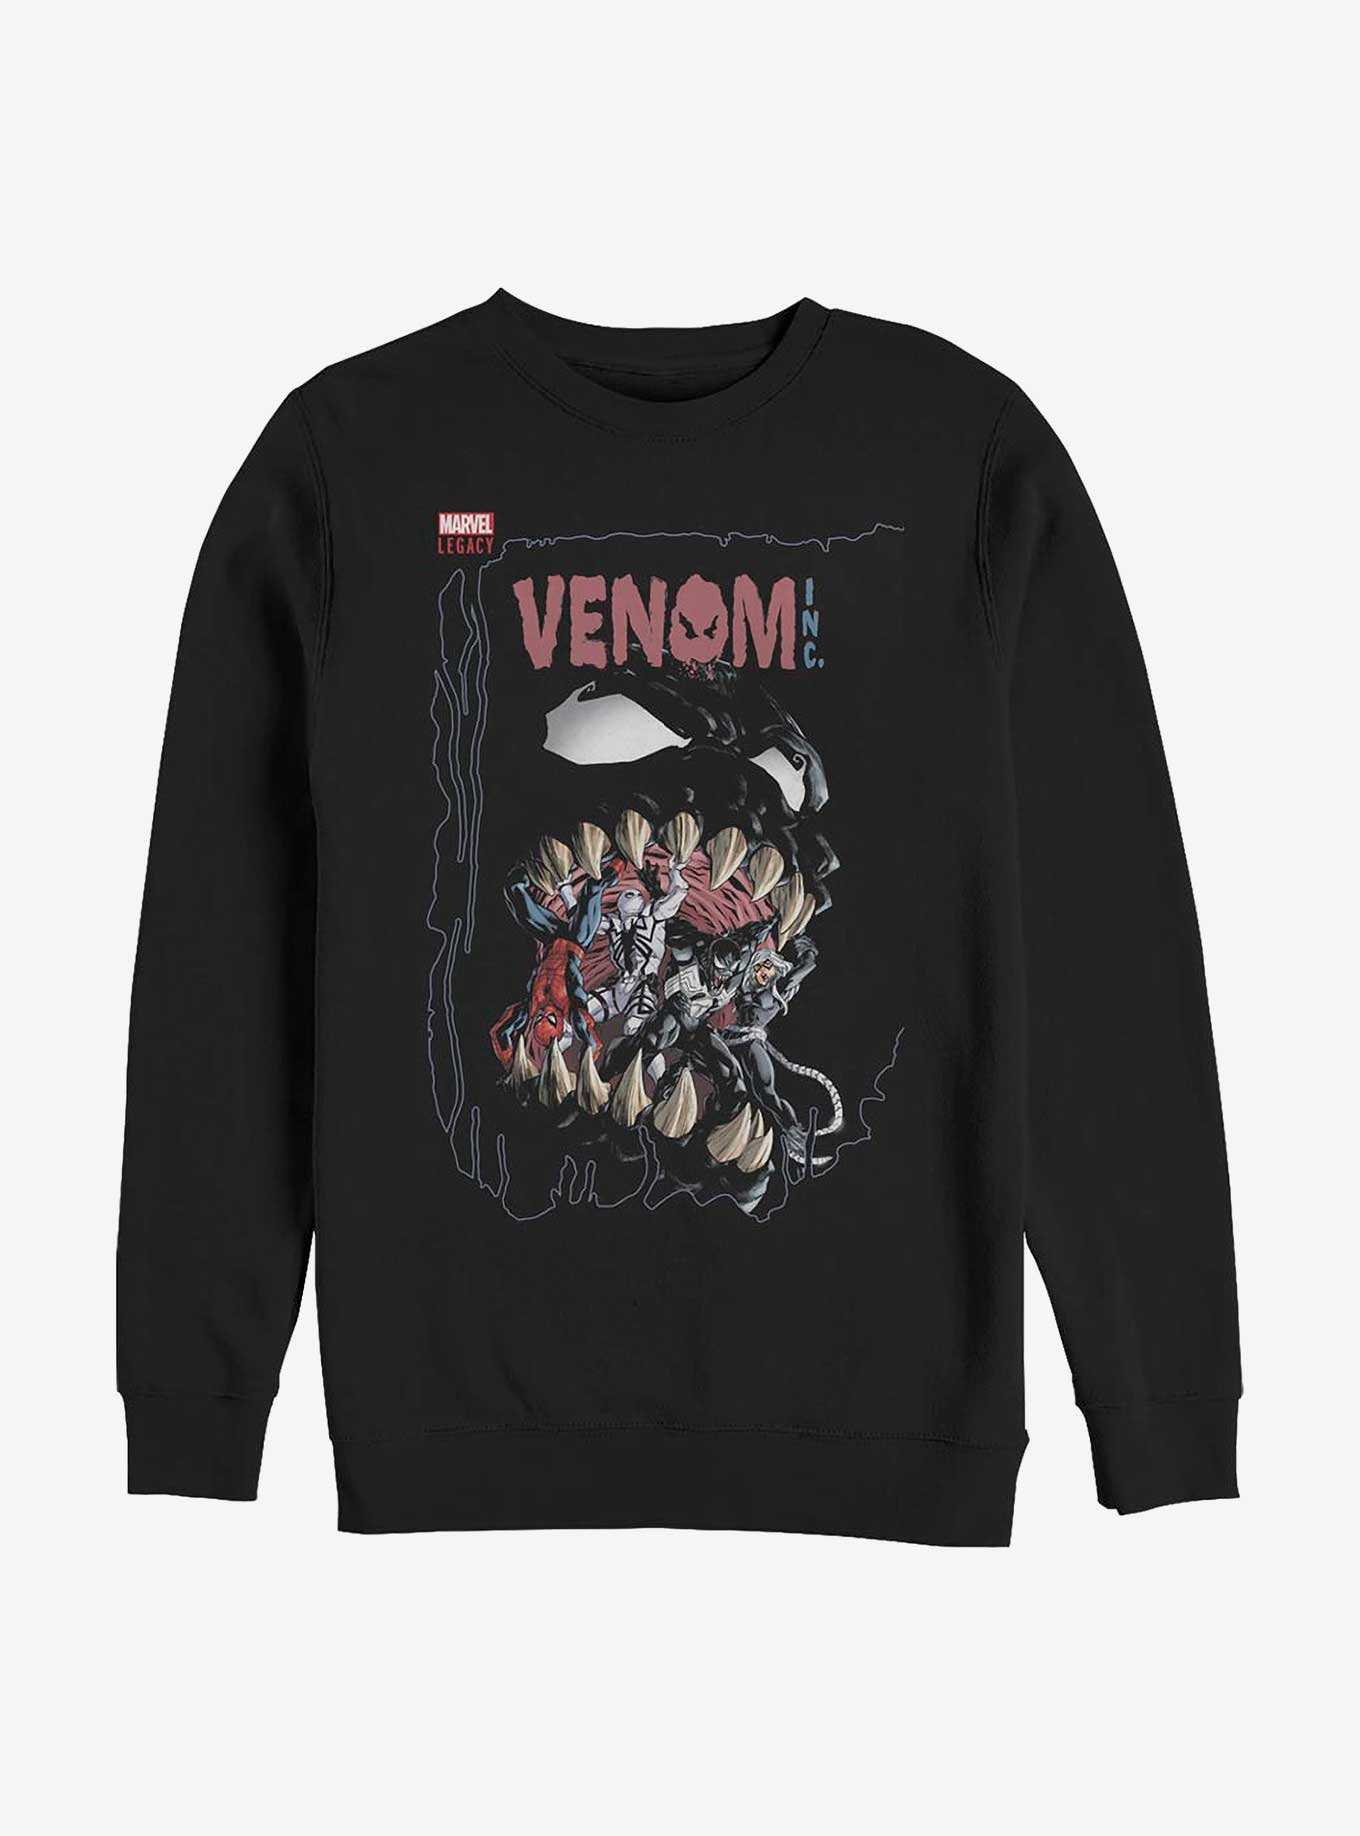 Marvel Venom Group Fight Sweatshirt, , hi-res